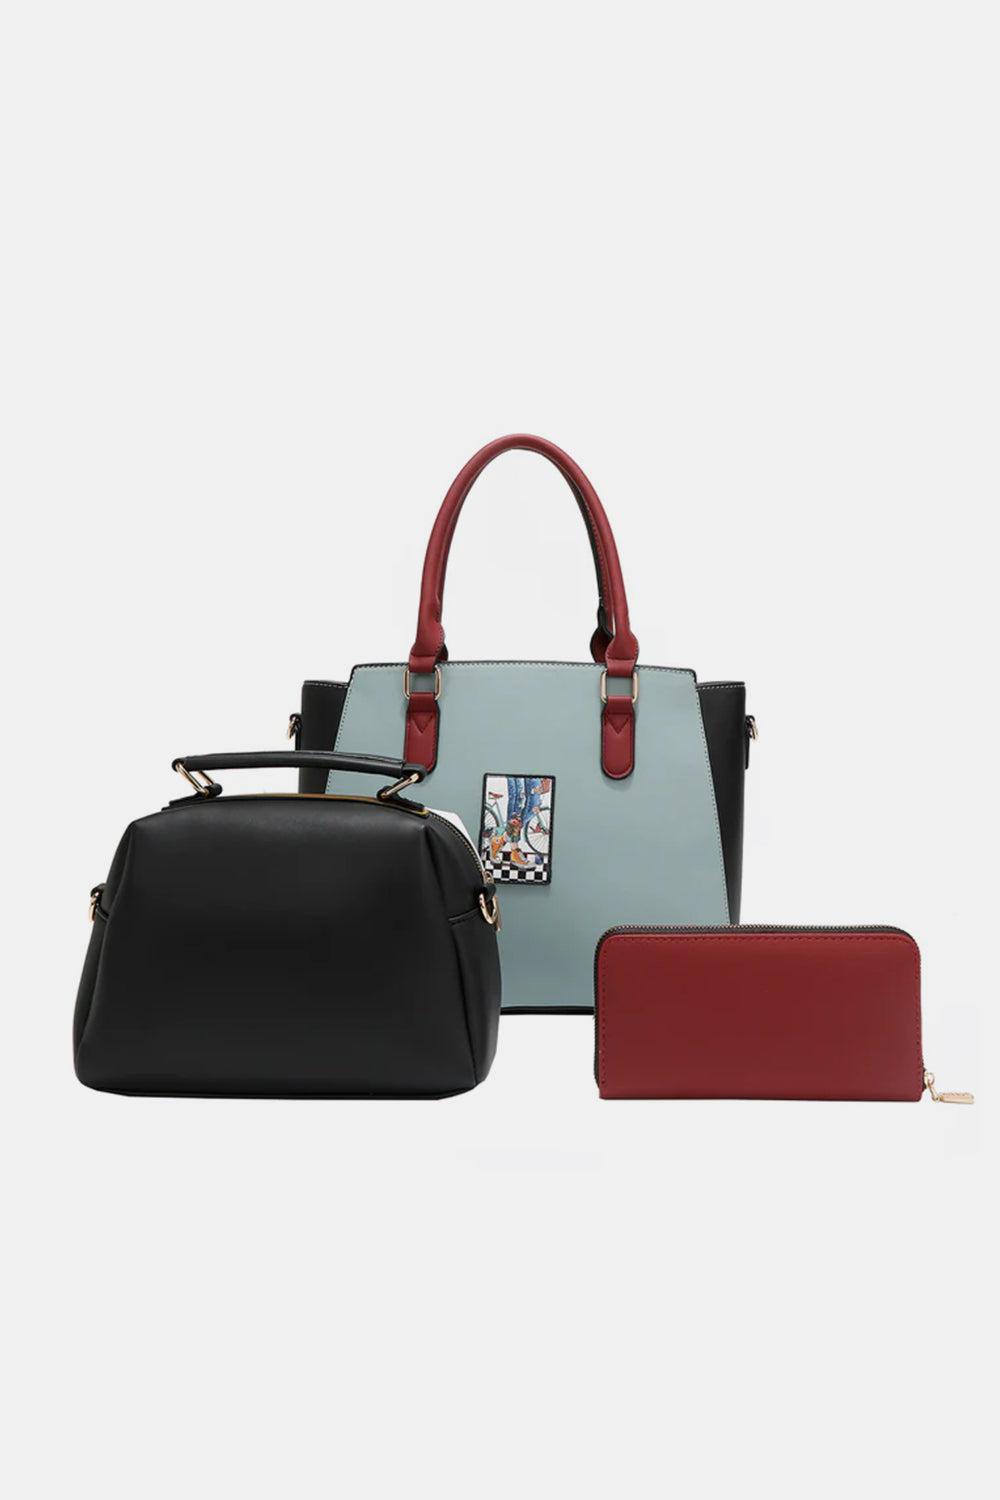 three pieces of handbags and a wallet